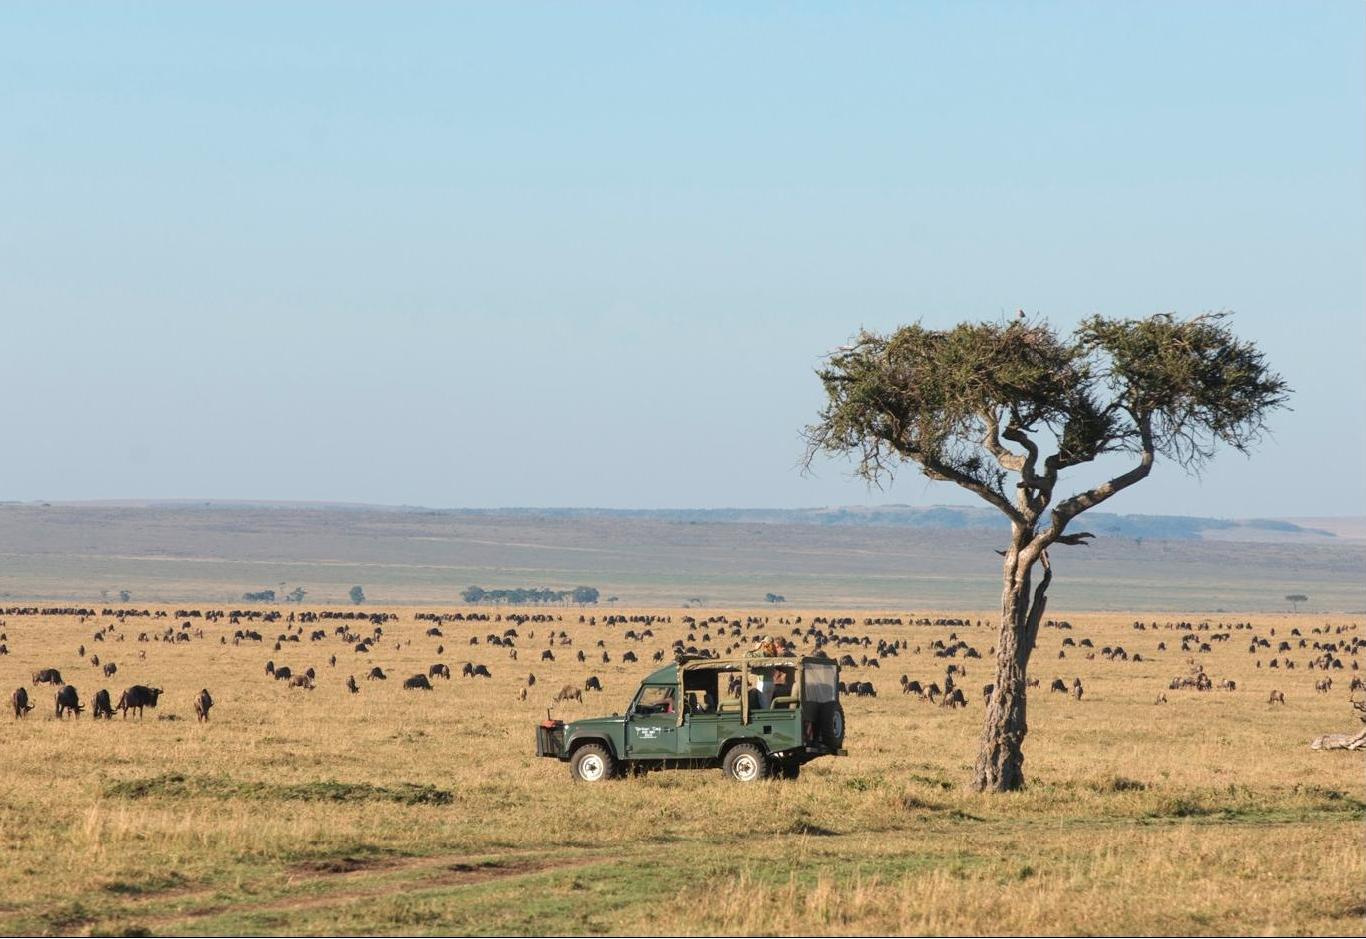 Wildebeests in the Mara Plains